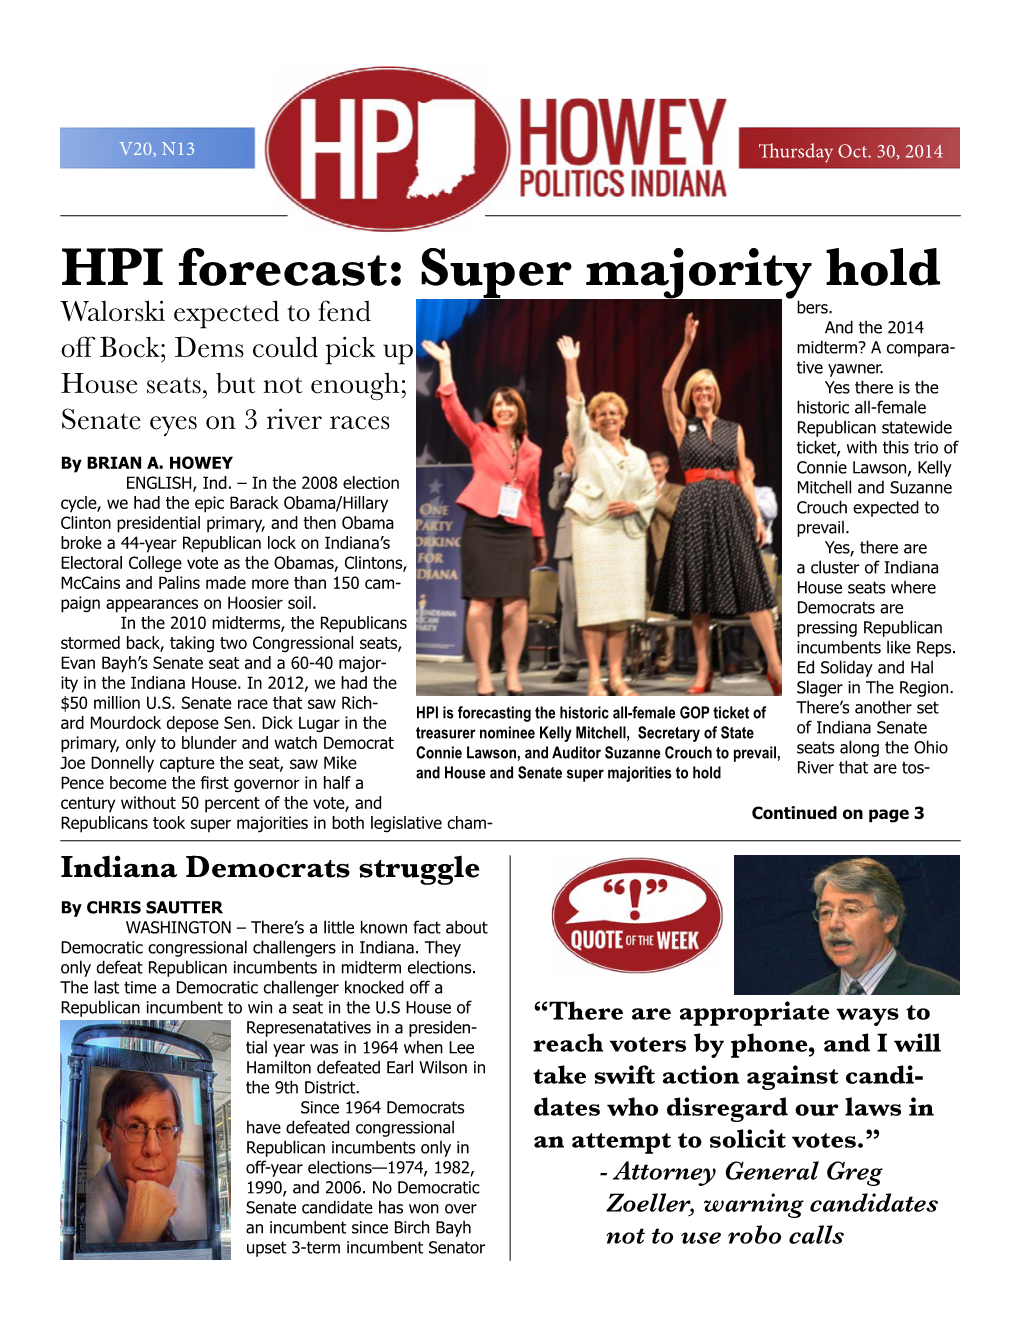 HPI Forecast: Super Majority Hold Bers